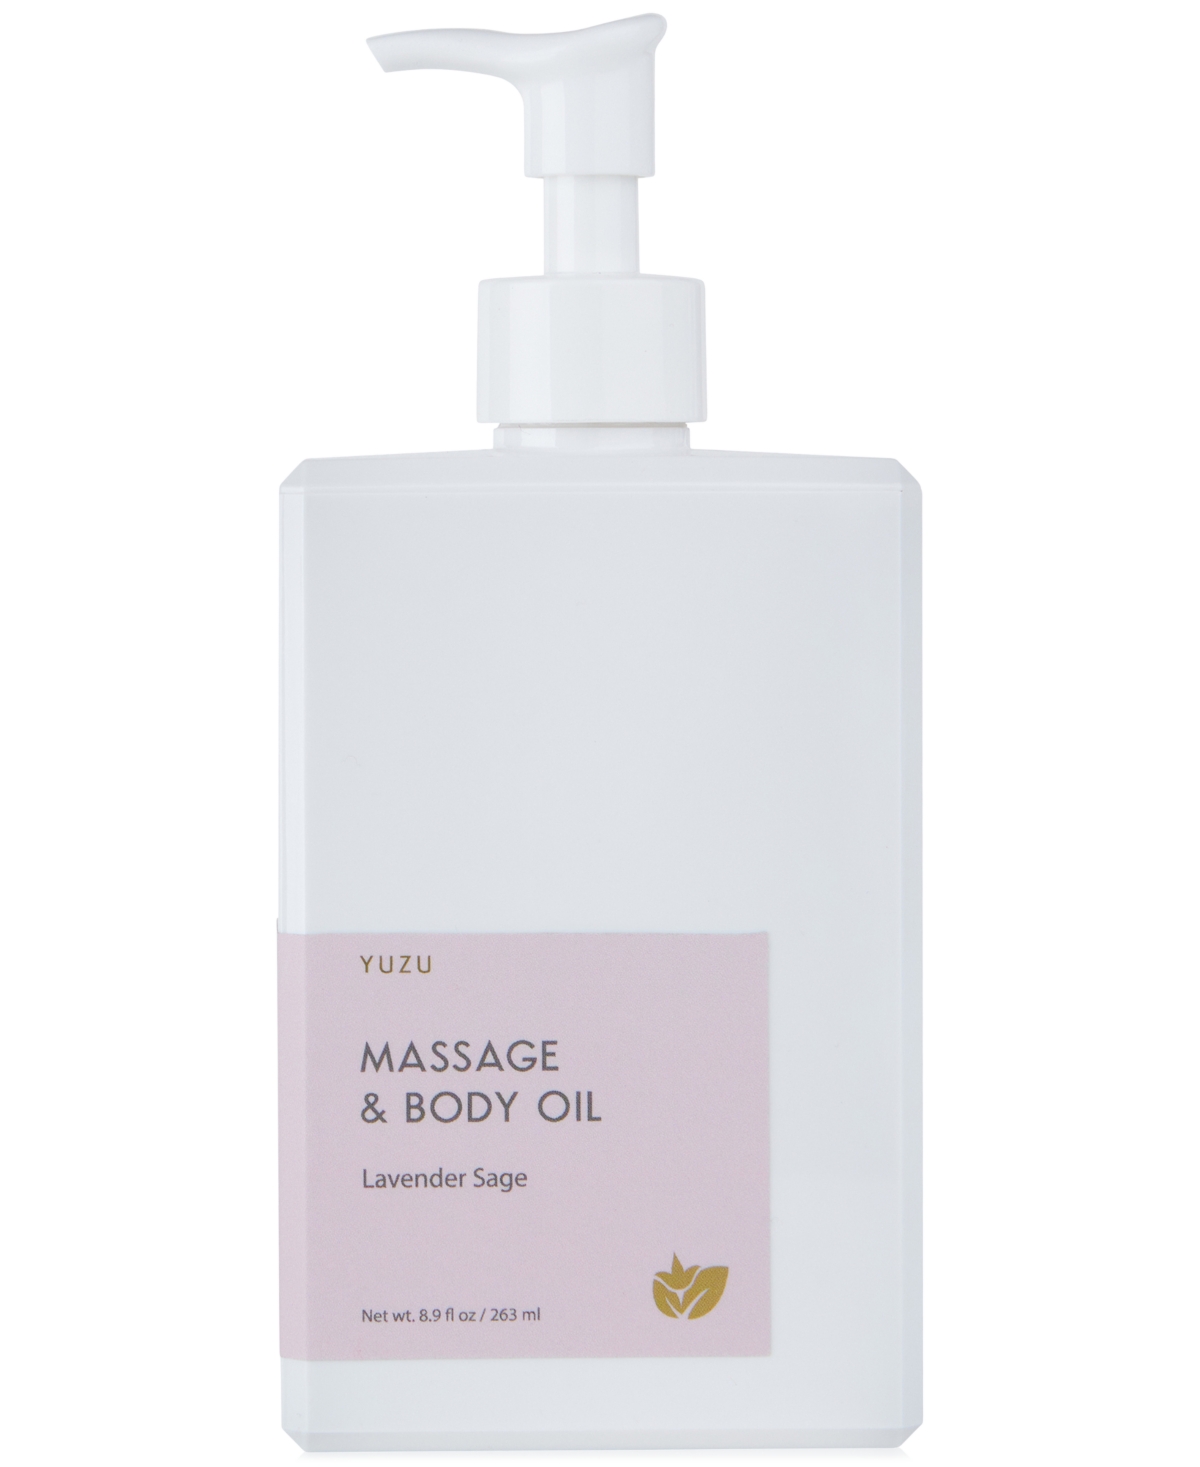 Lavender Sage Massage & Body Oil, 8.9 oz.